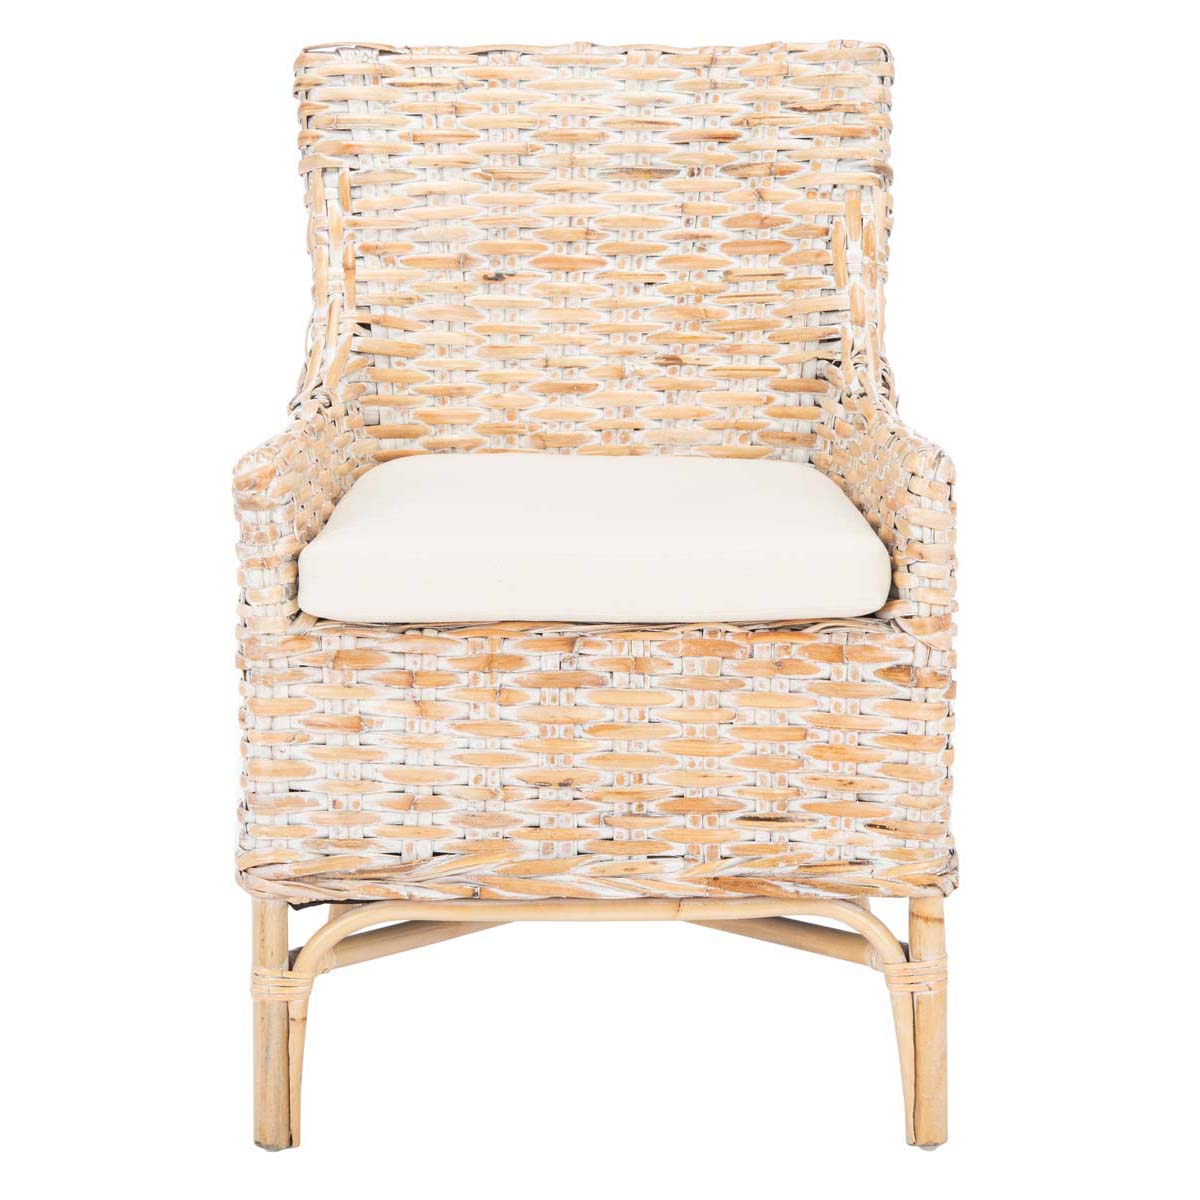 Safavieh Cristen Rattan Accent Chair With Cushion, ACH6513 - Natural White Wash